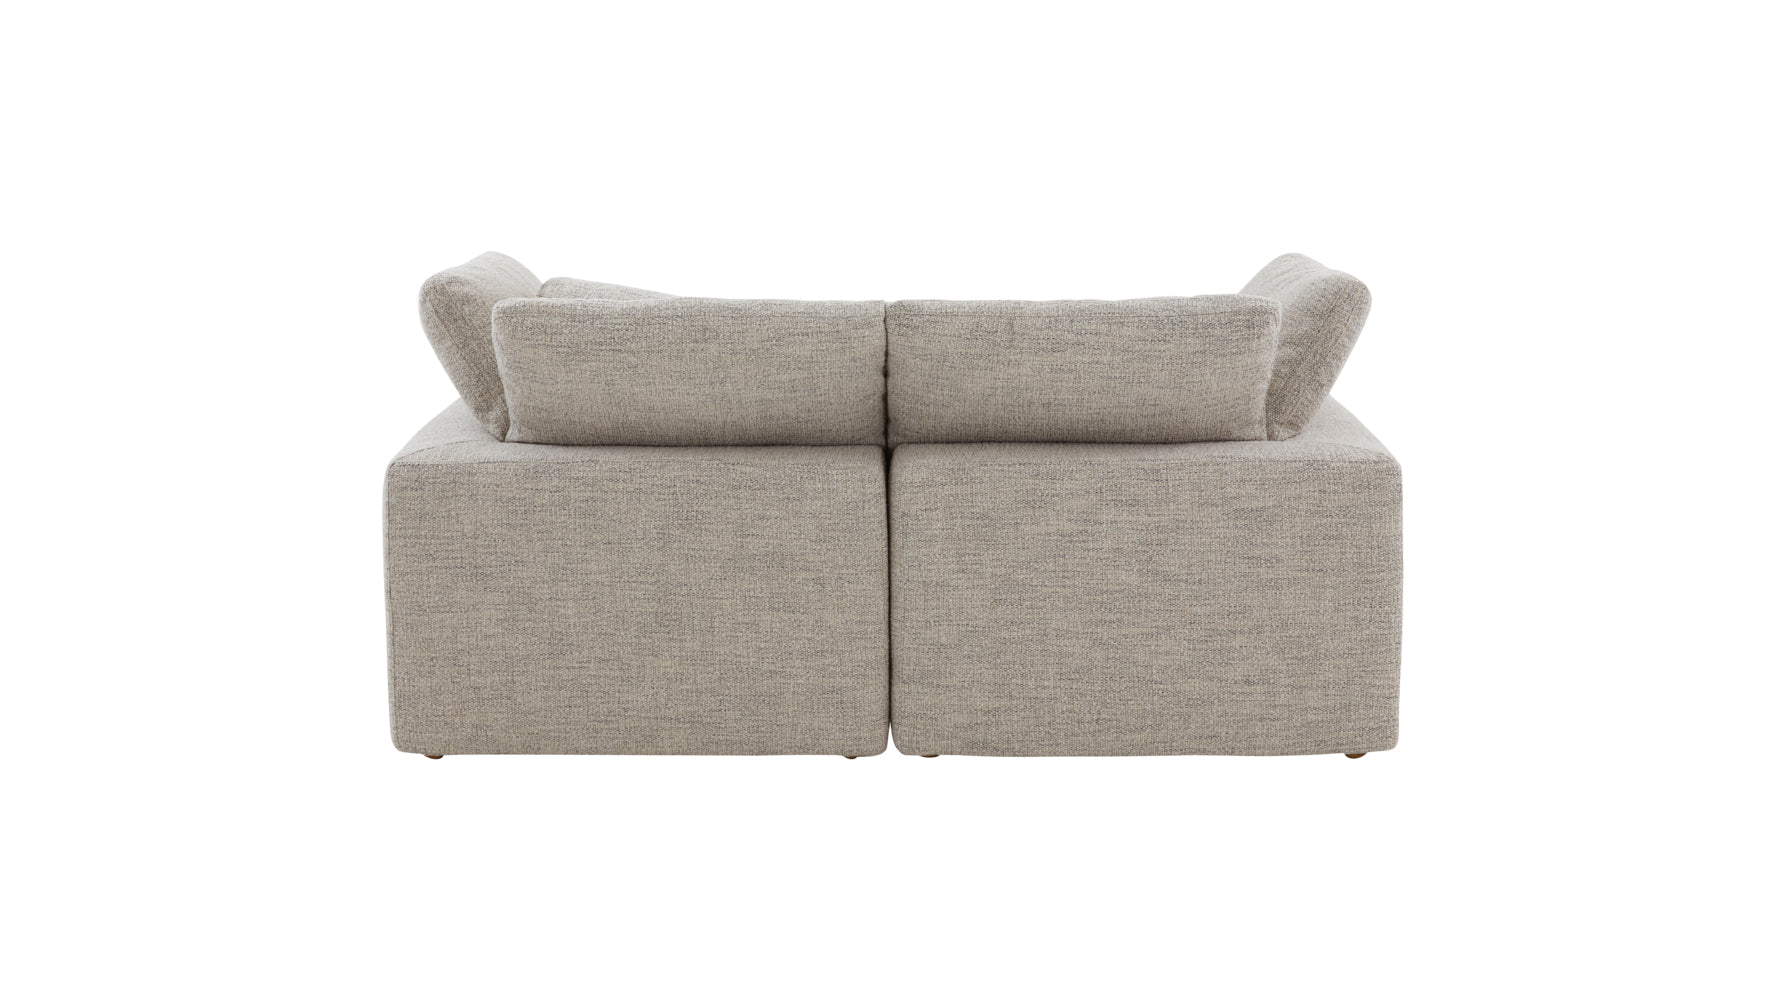 Movie Night™ 2-Piece Modular Sofa, Standard, Oatmeal - Image 6